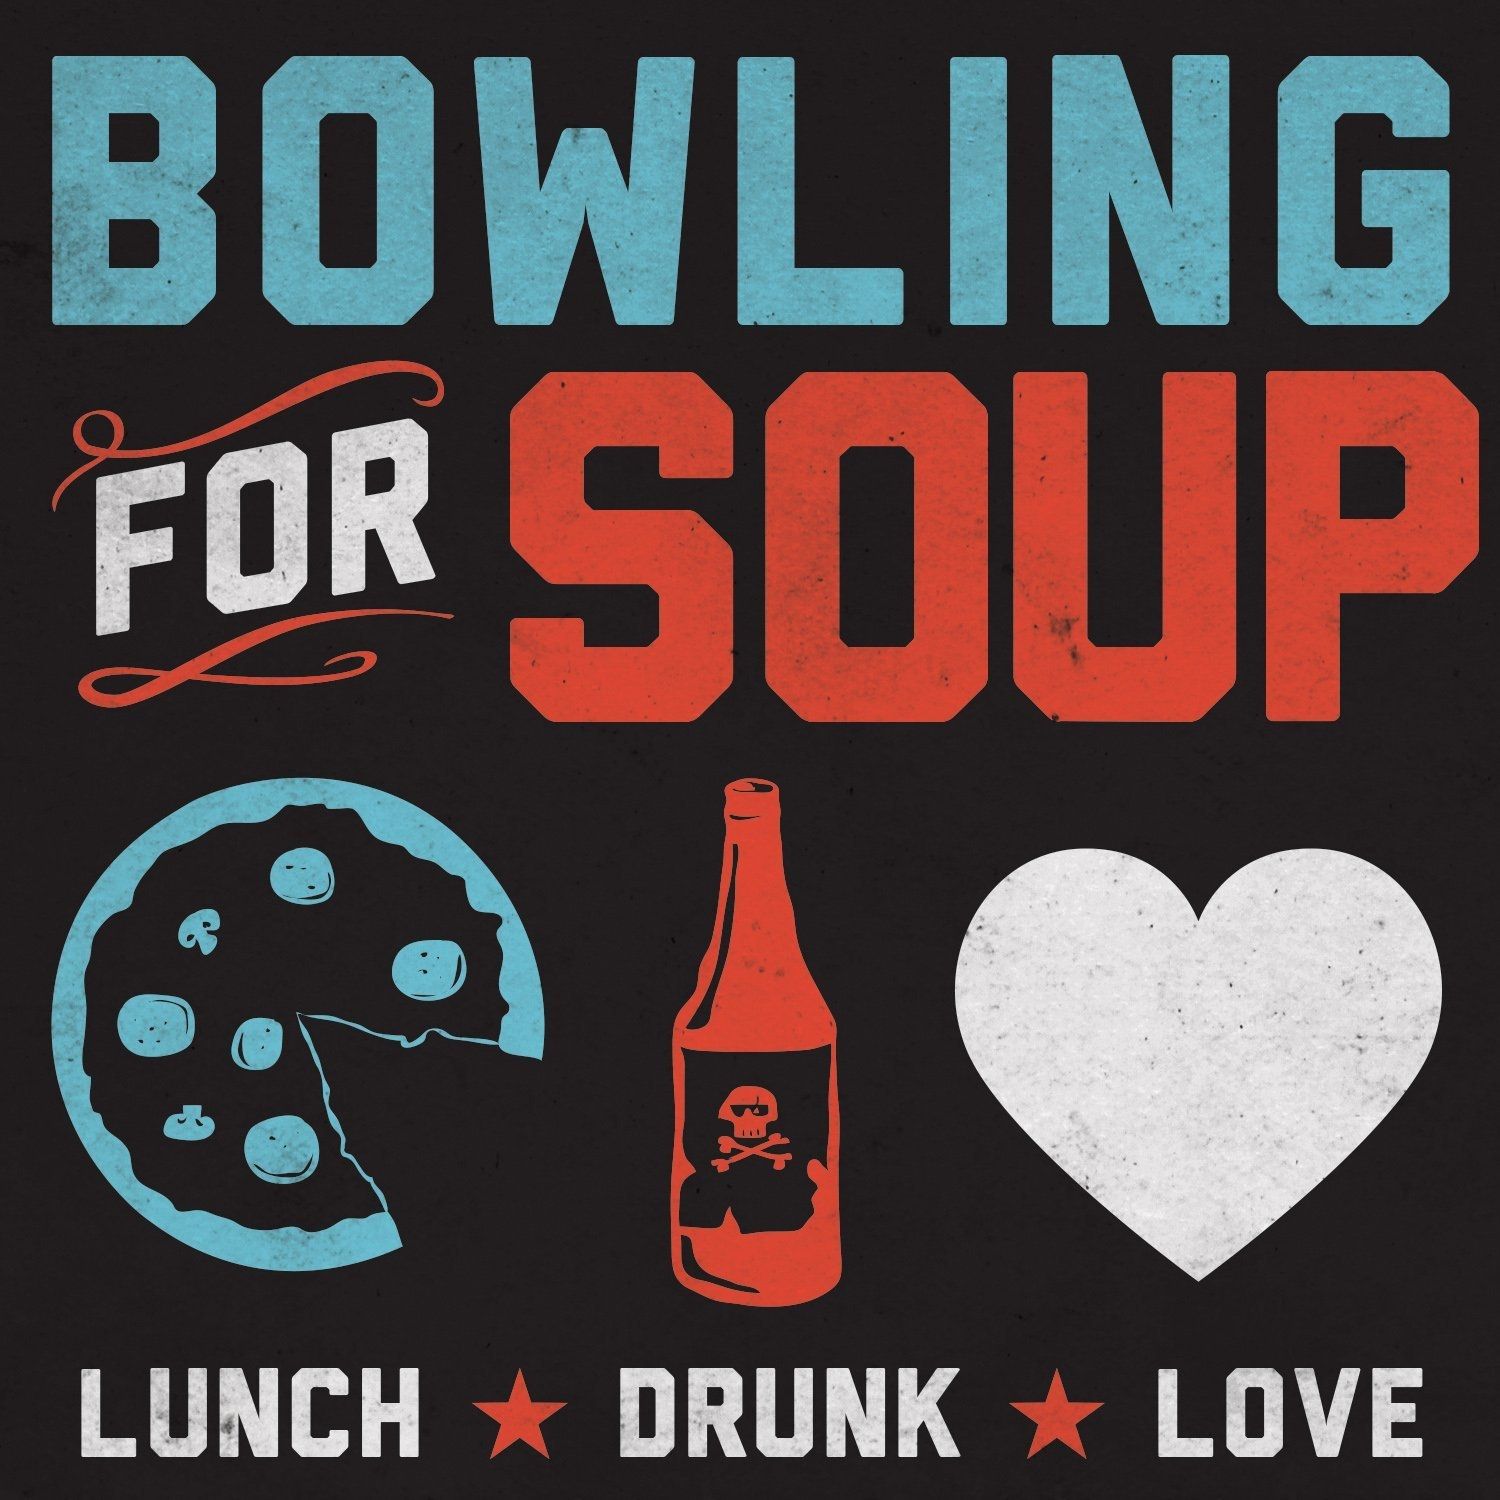 Imagem do álbum Lunch Drunk Love do(a) artista Bowling For Soup